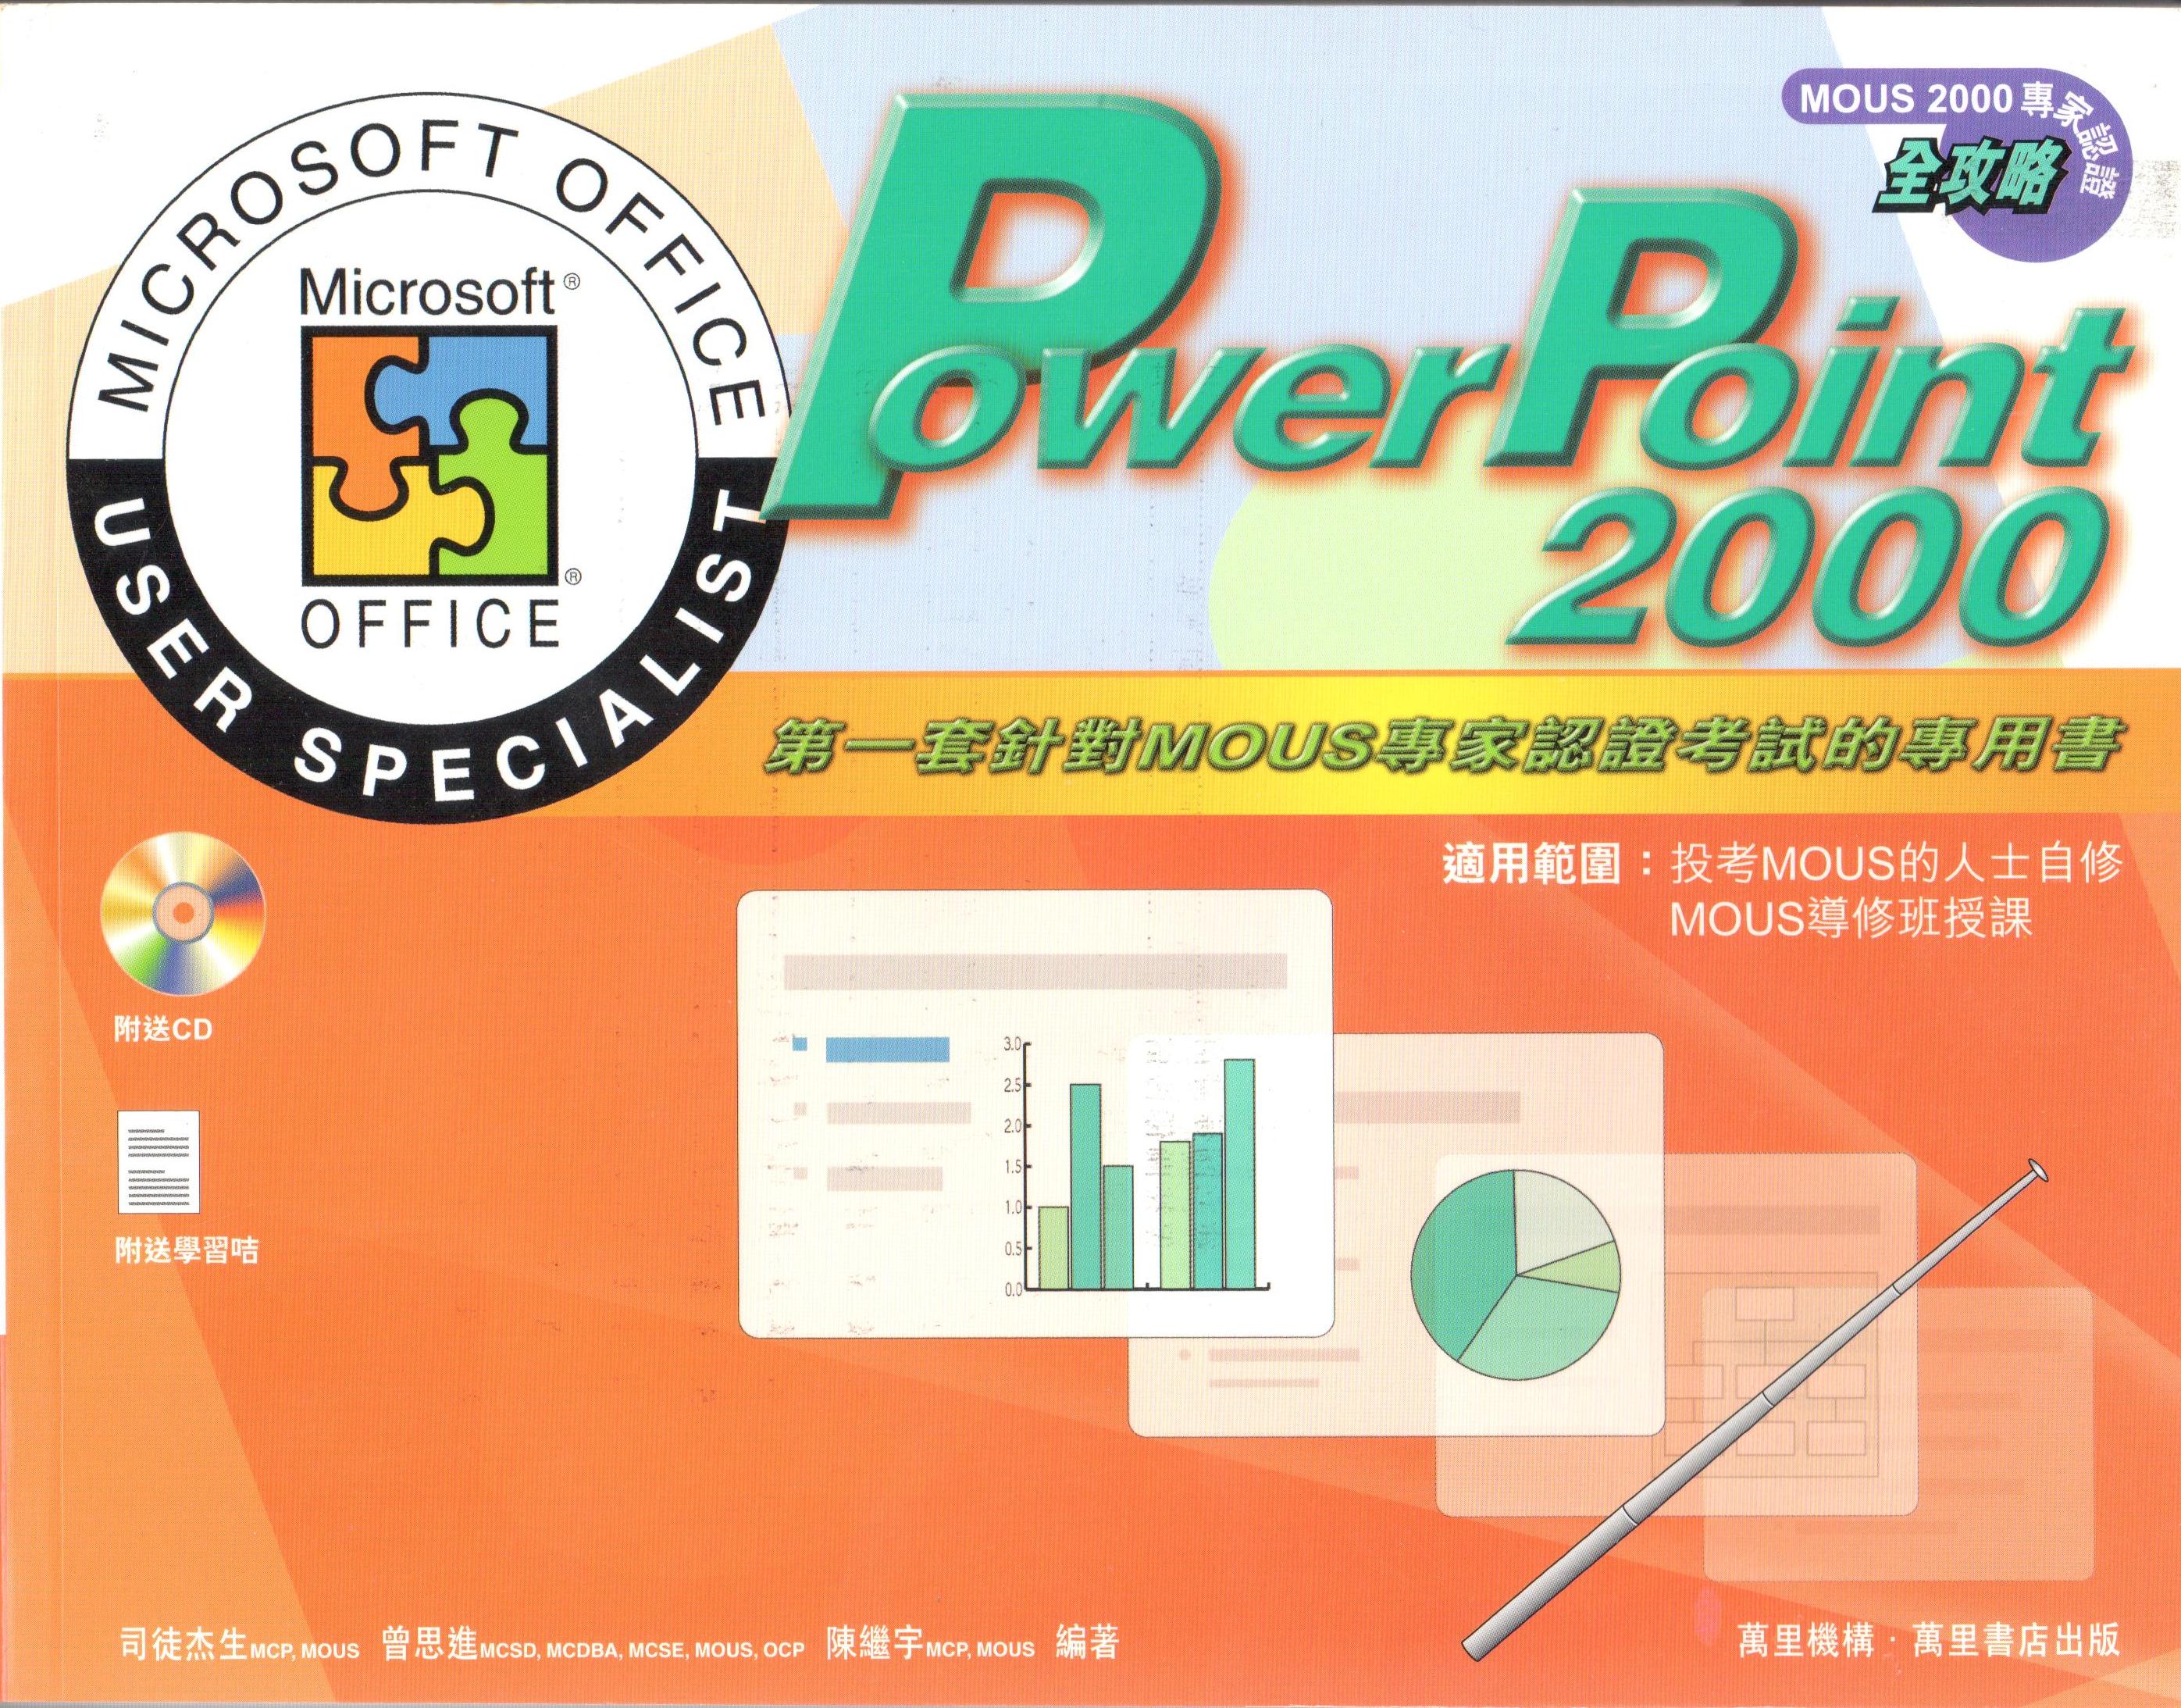 PowerPoint 2000 微軟辦公室專家認證全攻略